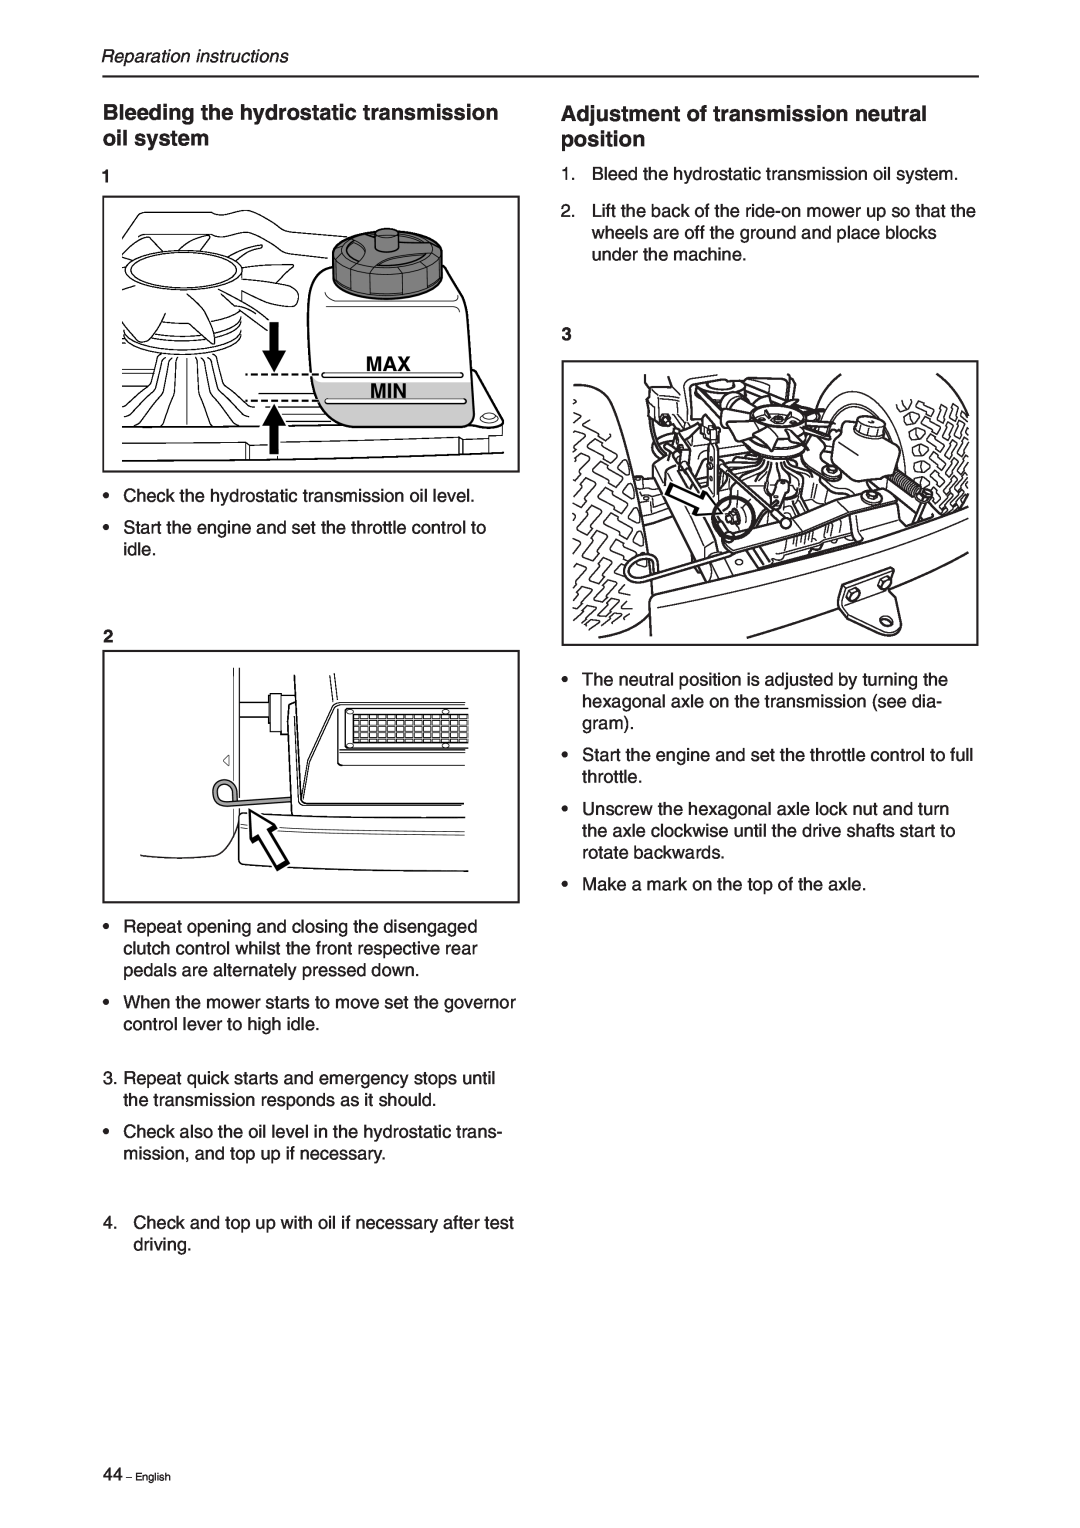 Briggs & Stratton RIDER 11 BIO, RIDER 16 manual Bleeding the hydrostatic transmission oil system, Reparation instructions 